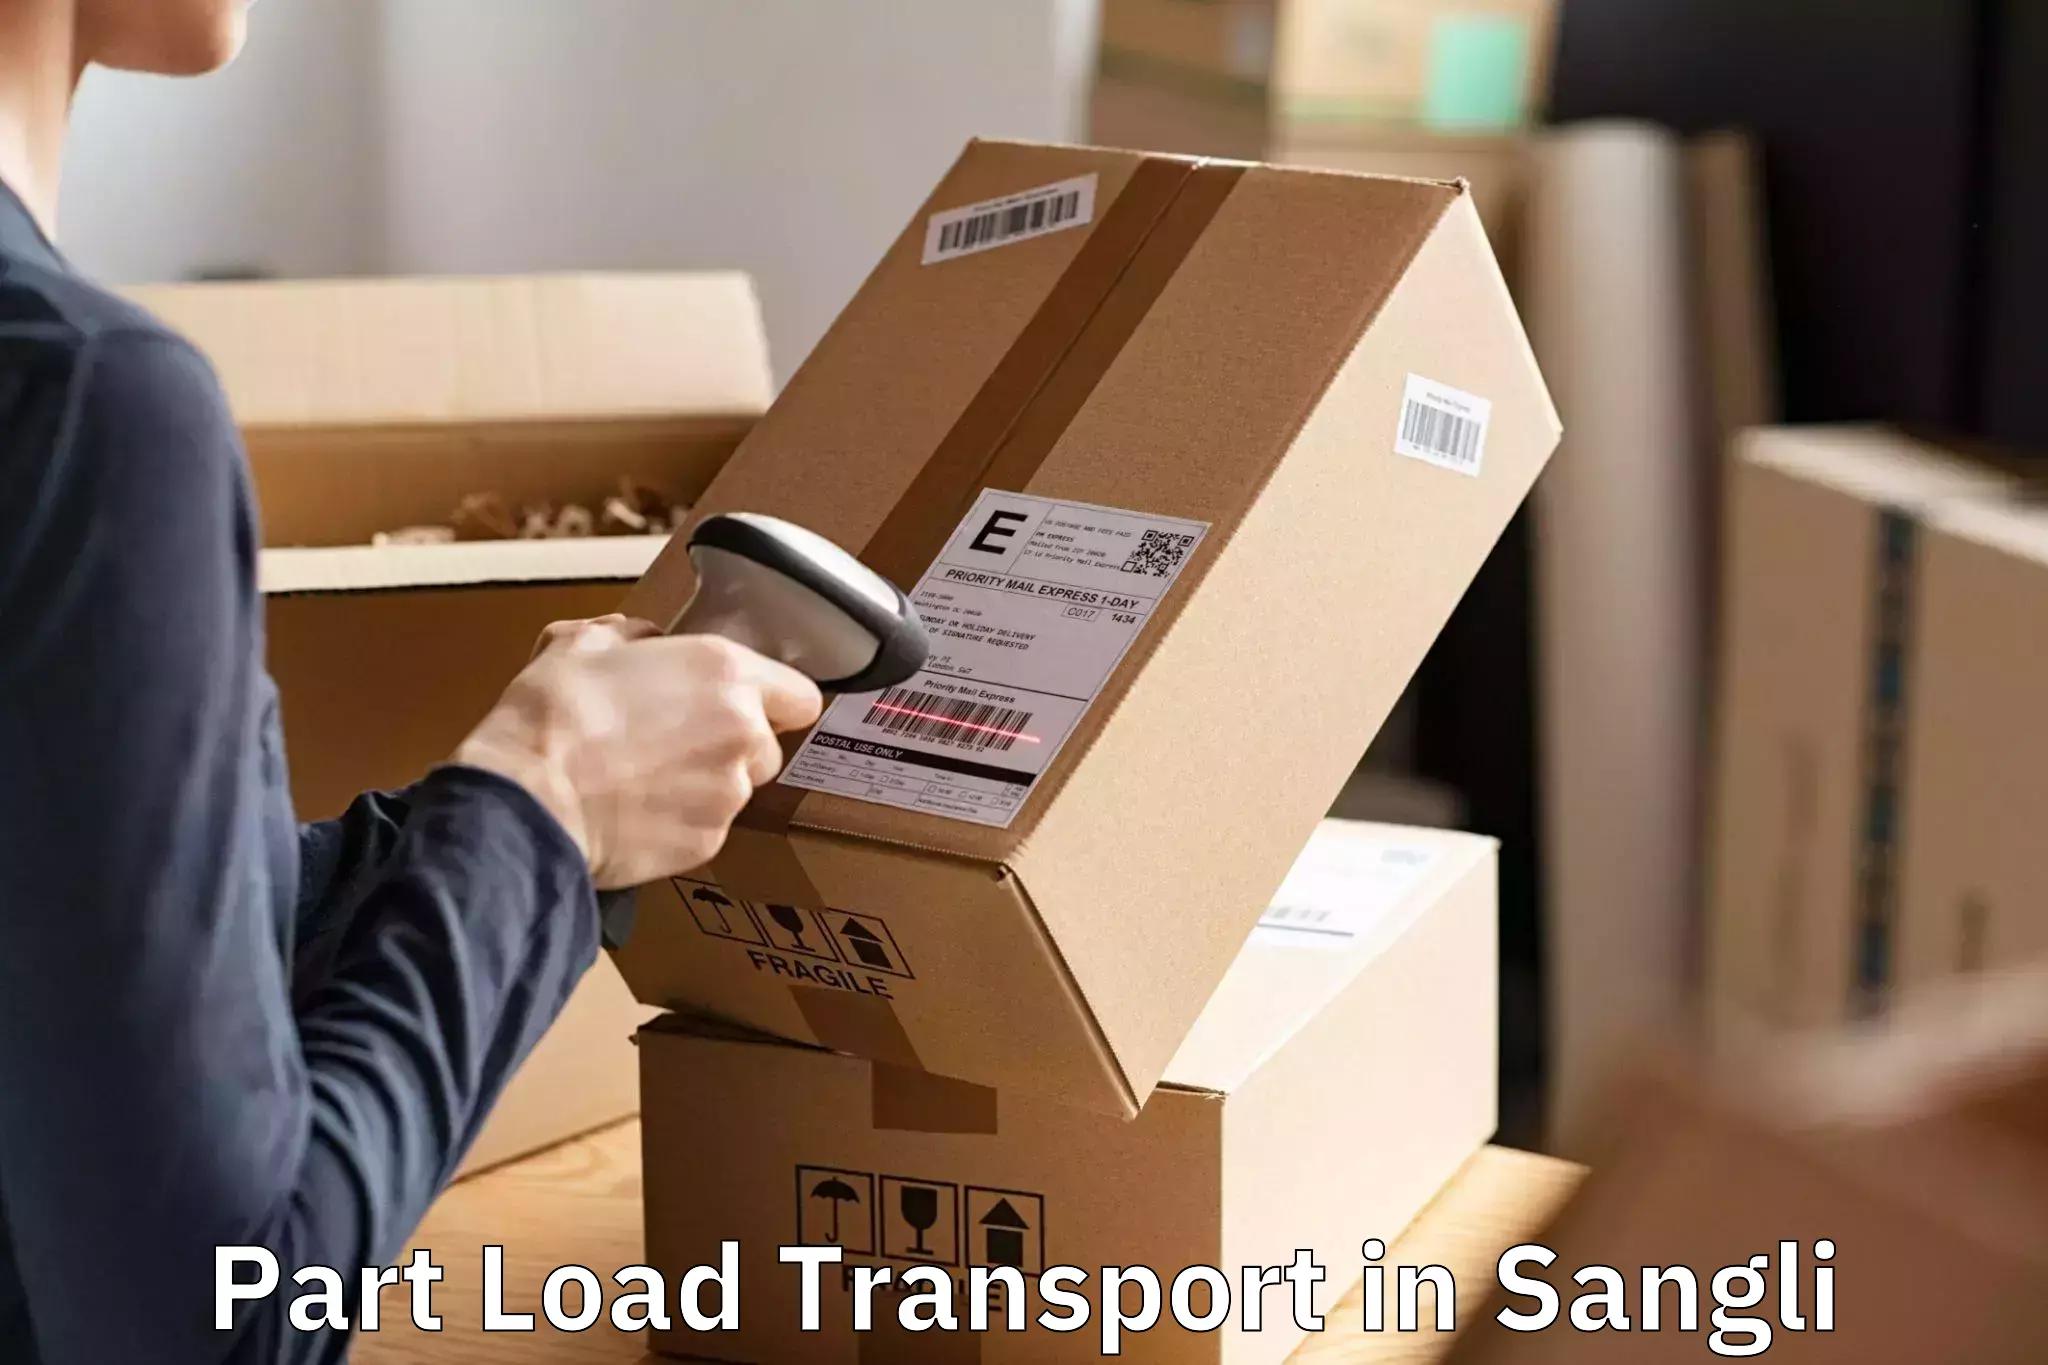 Get Part Load Transport in Sangli, Maharashtra (MH)